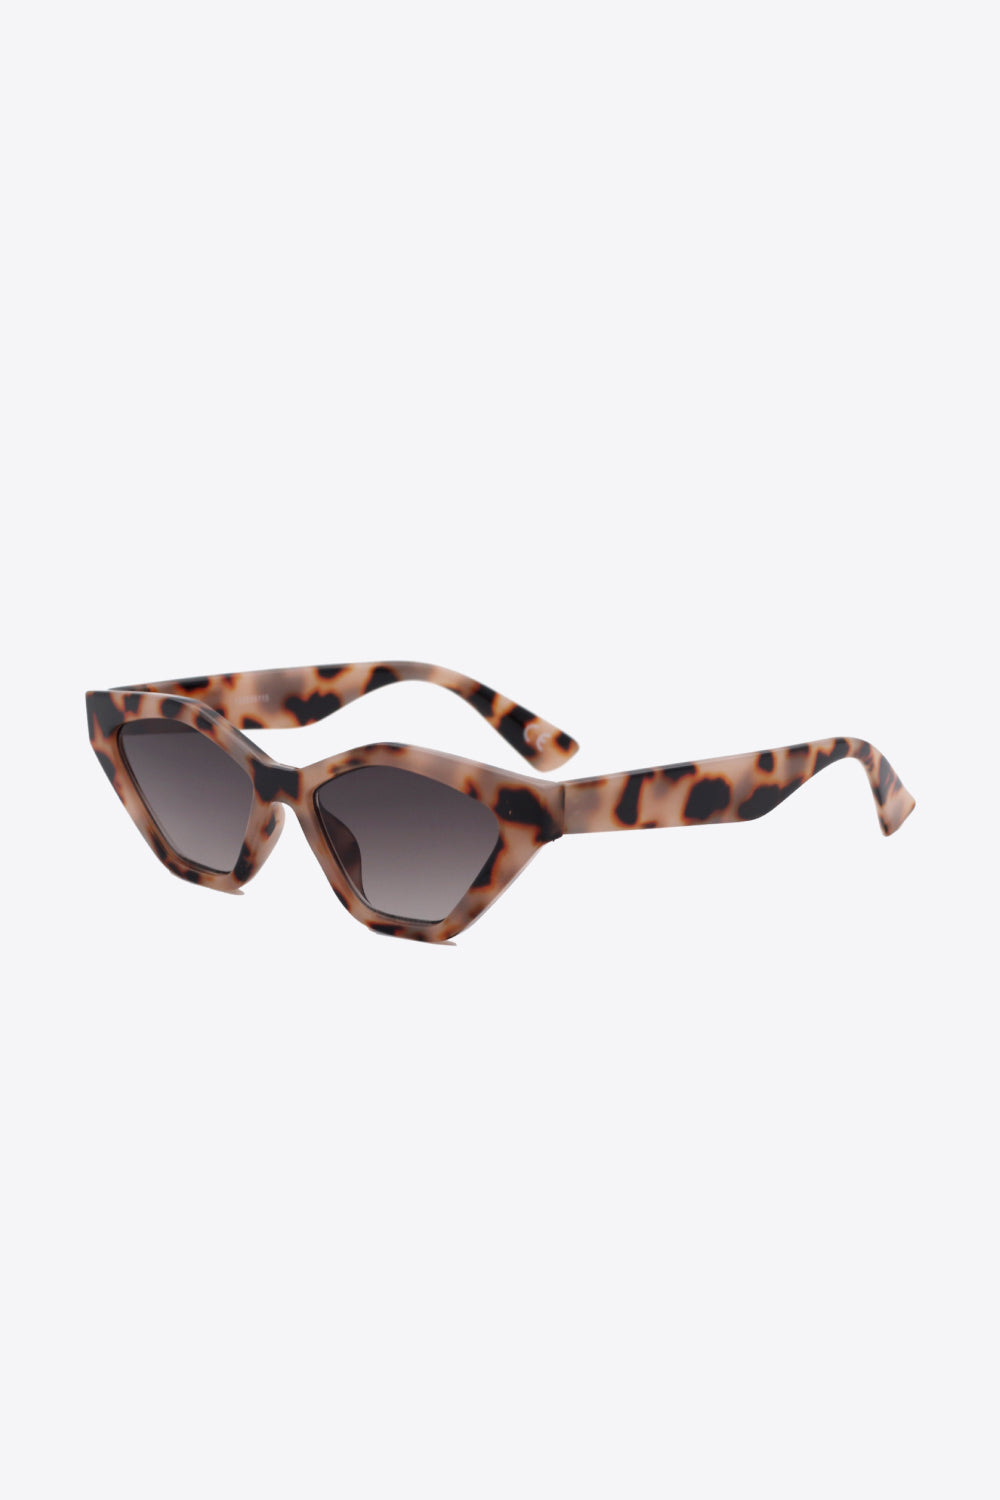 Cat Eye Polycarbonate Sunglasses - Sunglasses - FITGGINS